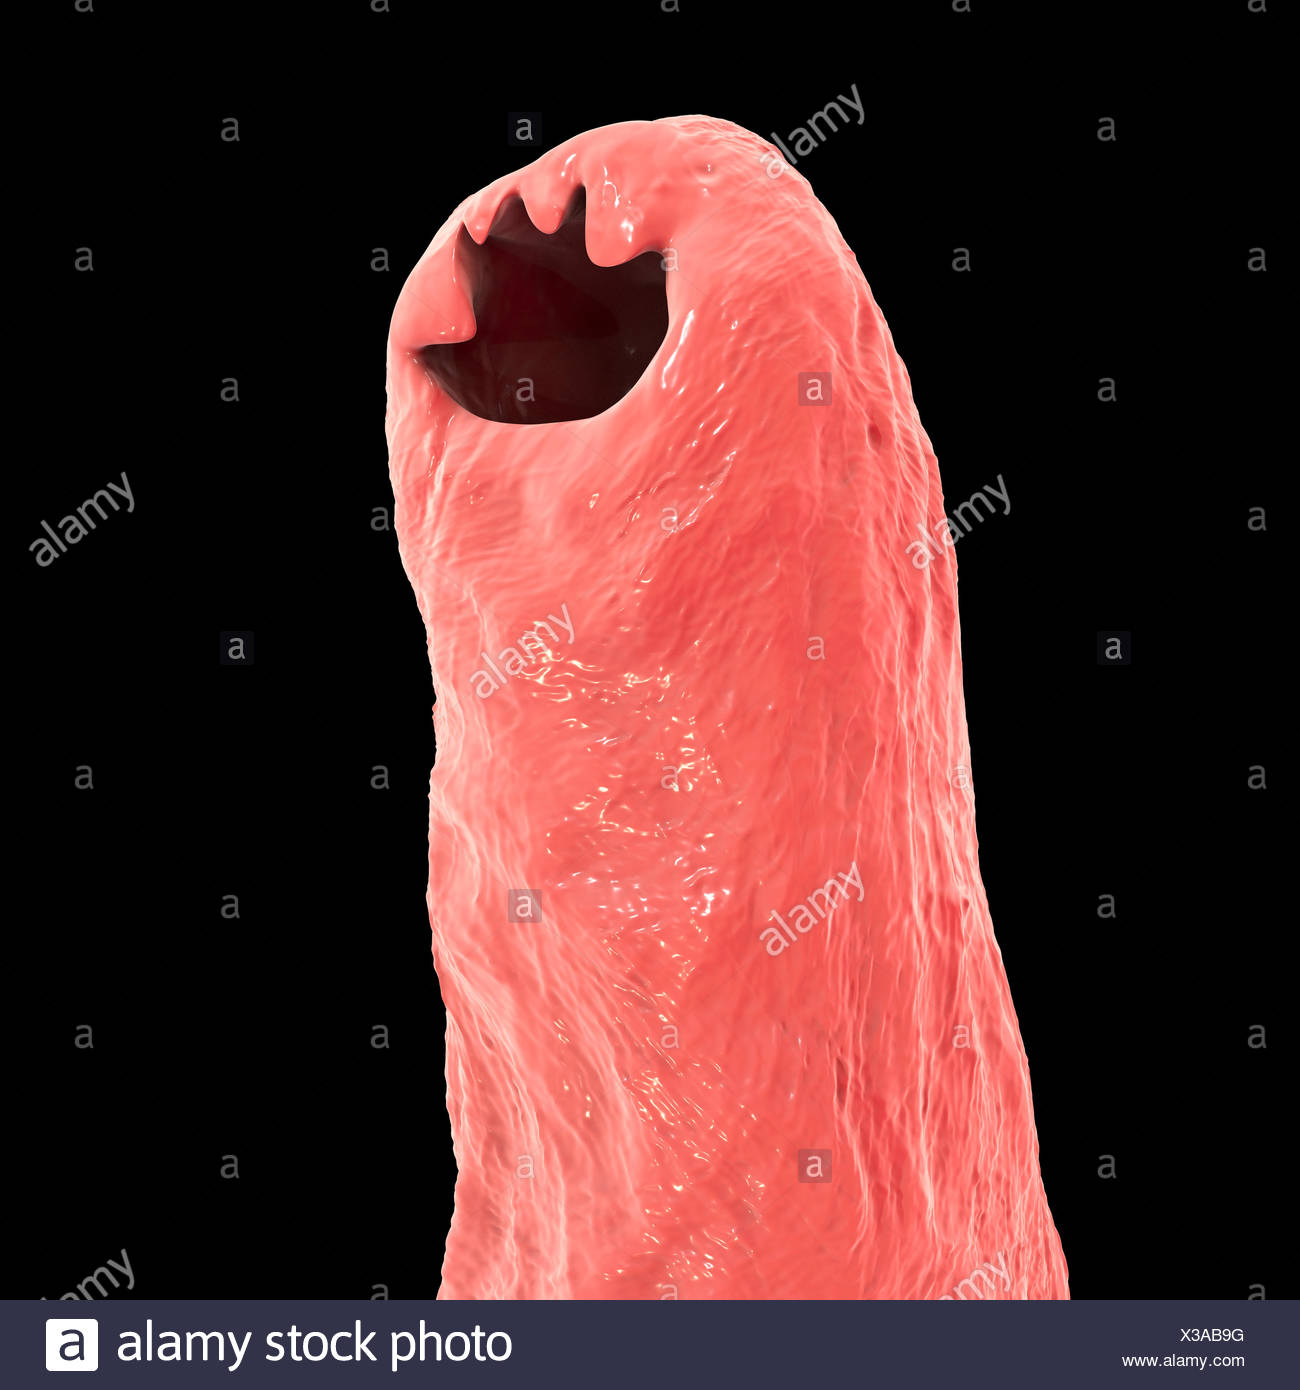 Parasitic Roundworm Stock Photos & Parasitic Roundworm Stock Images - Alamy1300 x 1390